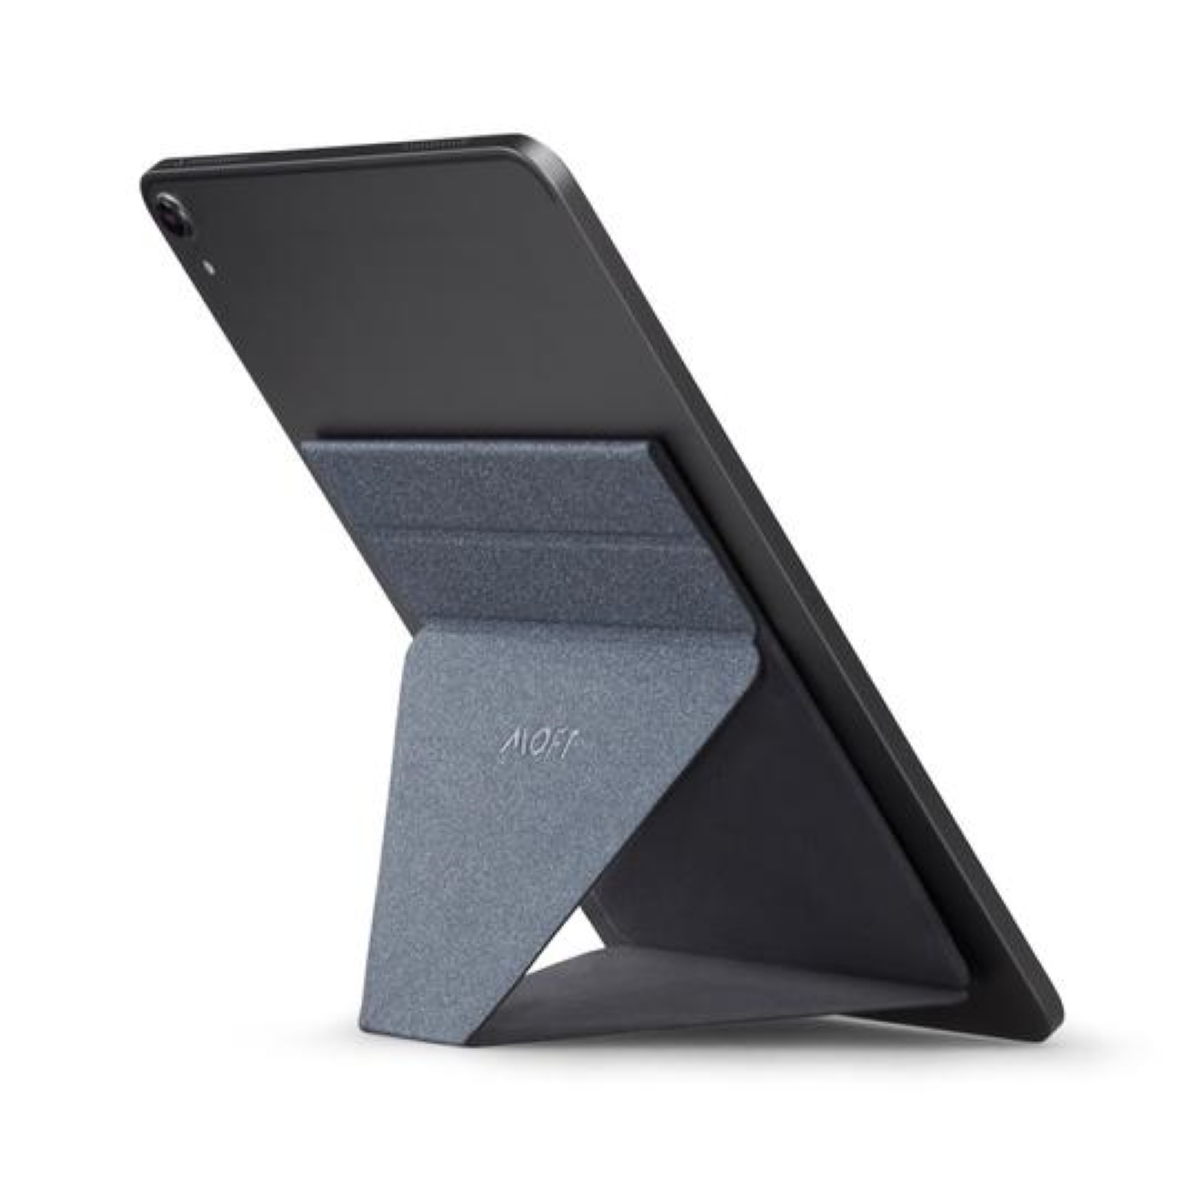 MOFT X Tablet Stand - Ergonomic Design